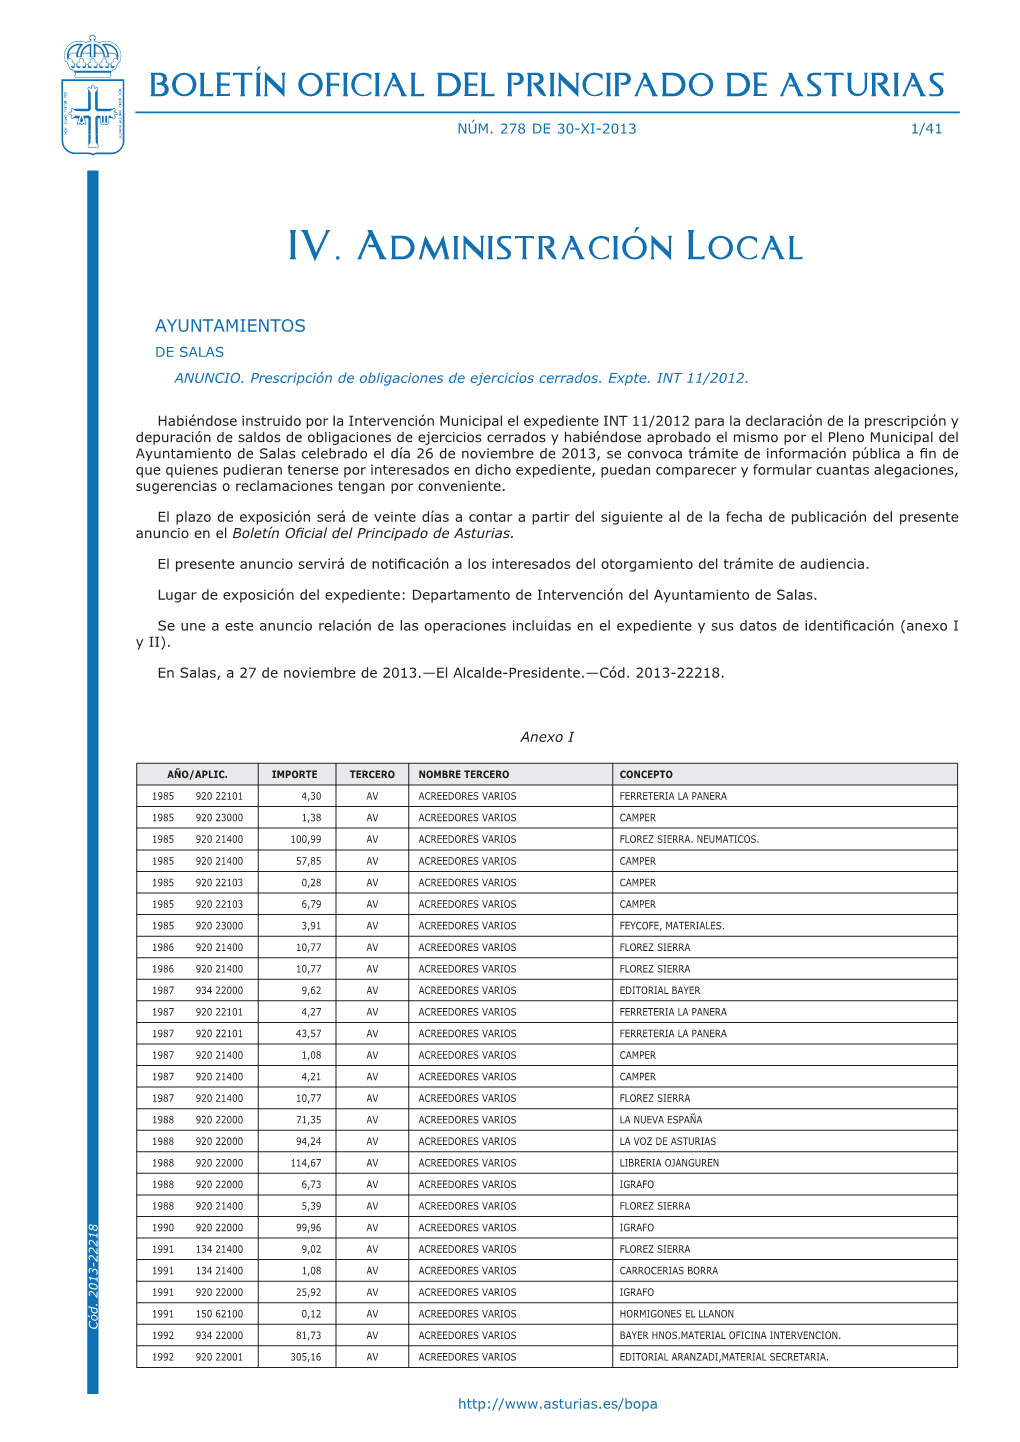 IV. Administración Local